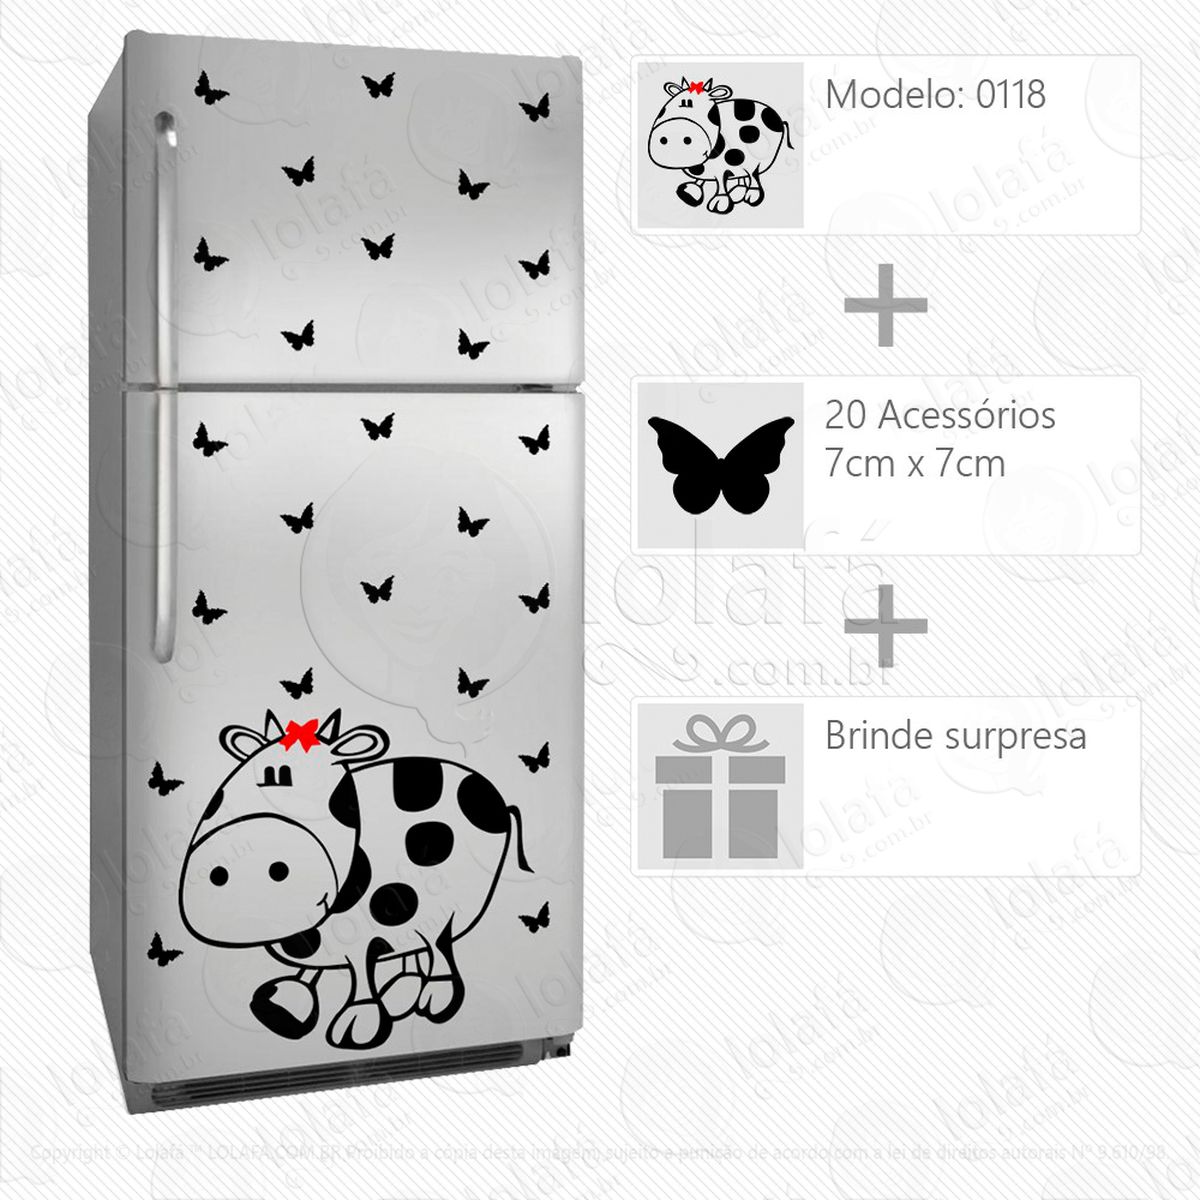 vaca adesivo para geladeira e frigobar - mod:118